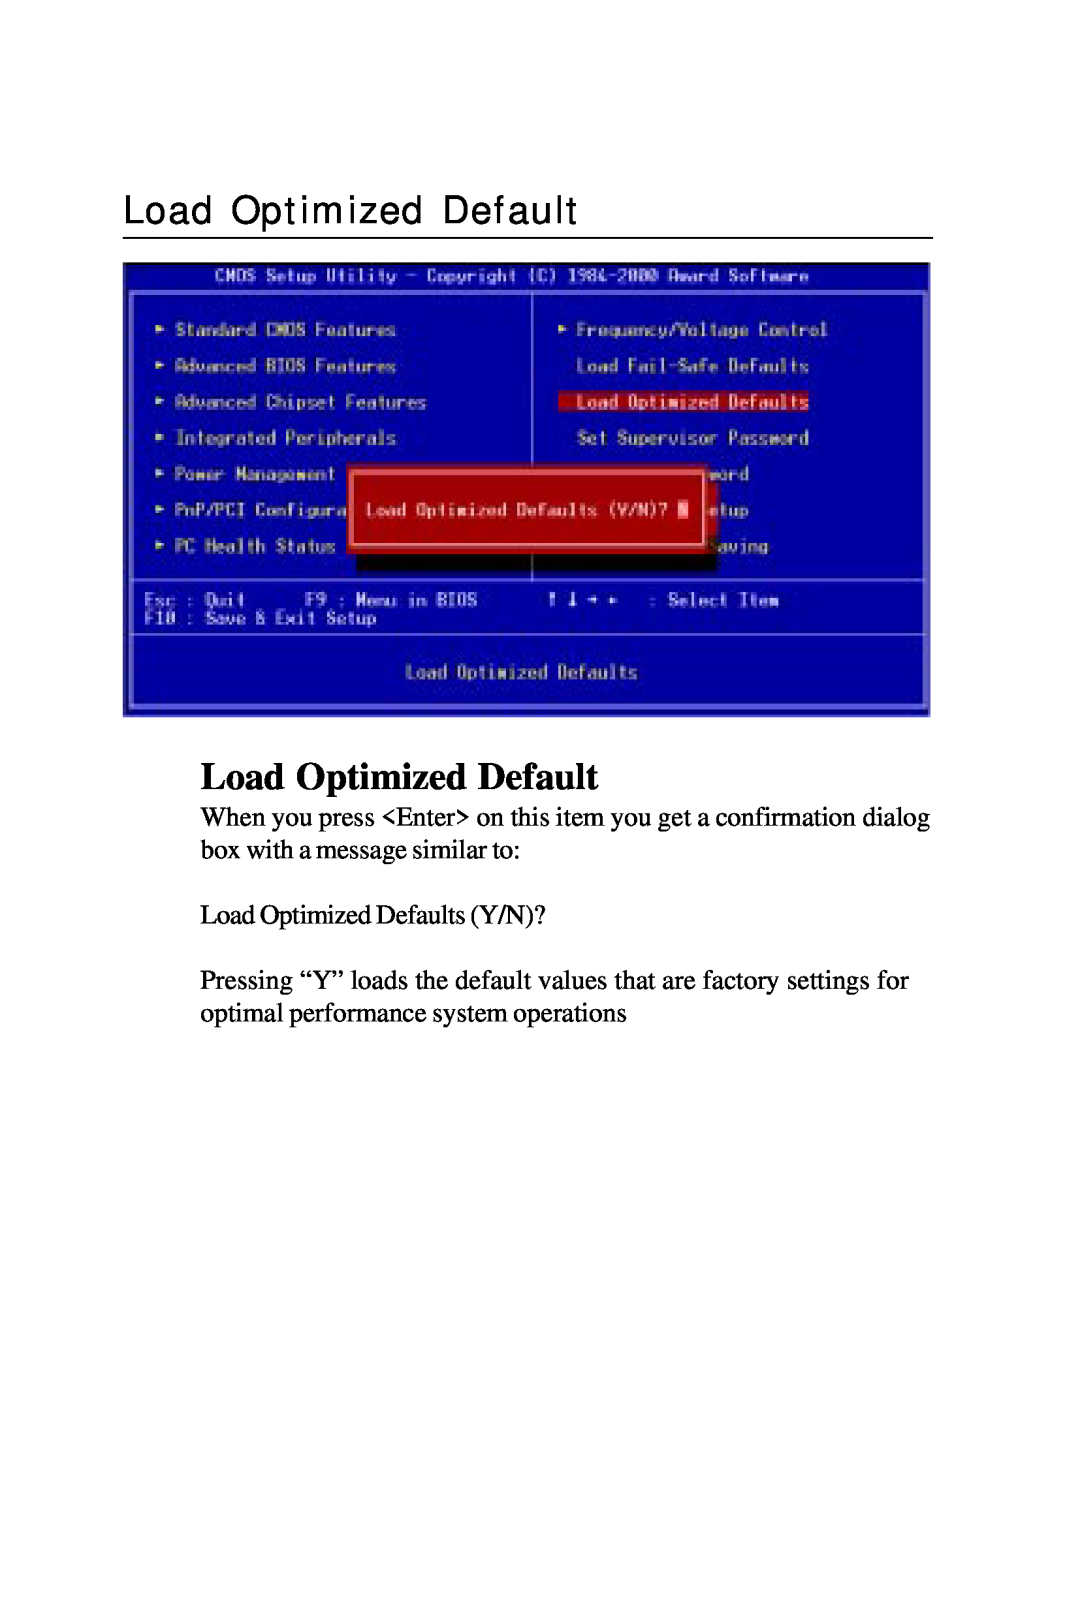 Intel PCM-6896 manual Load Optimized Default 